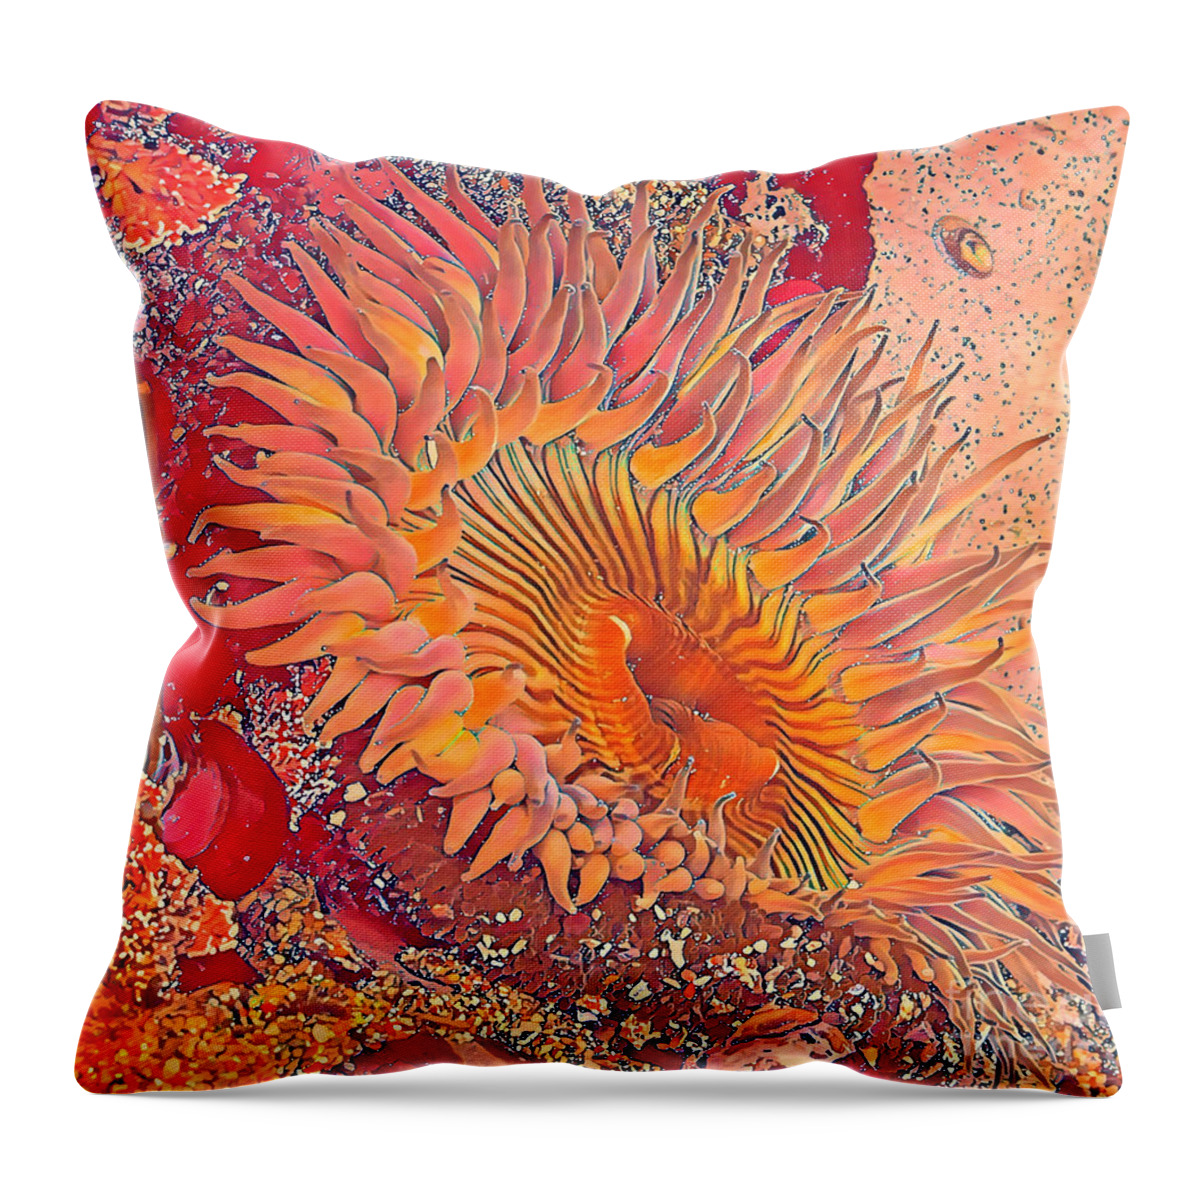 Anemone Throw Pillow featuring the photograph Ocean Firestarter by Reena Kapoor